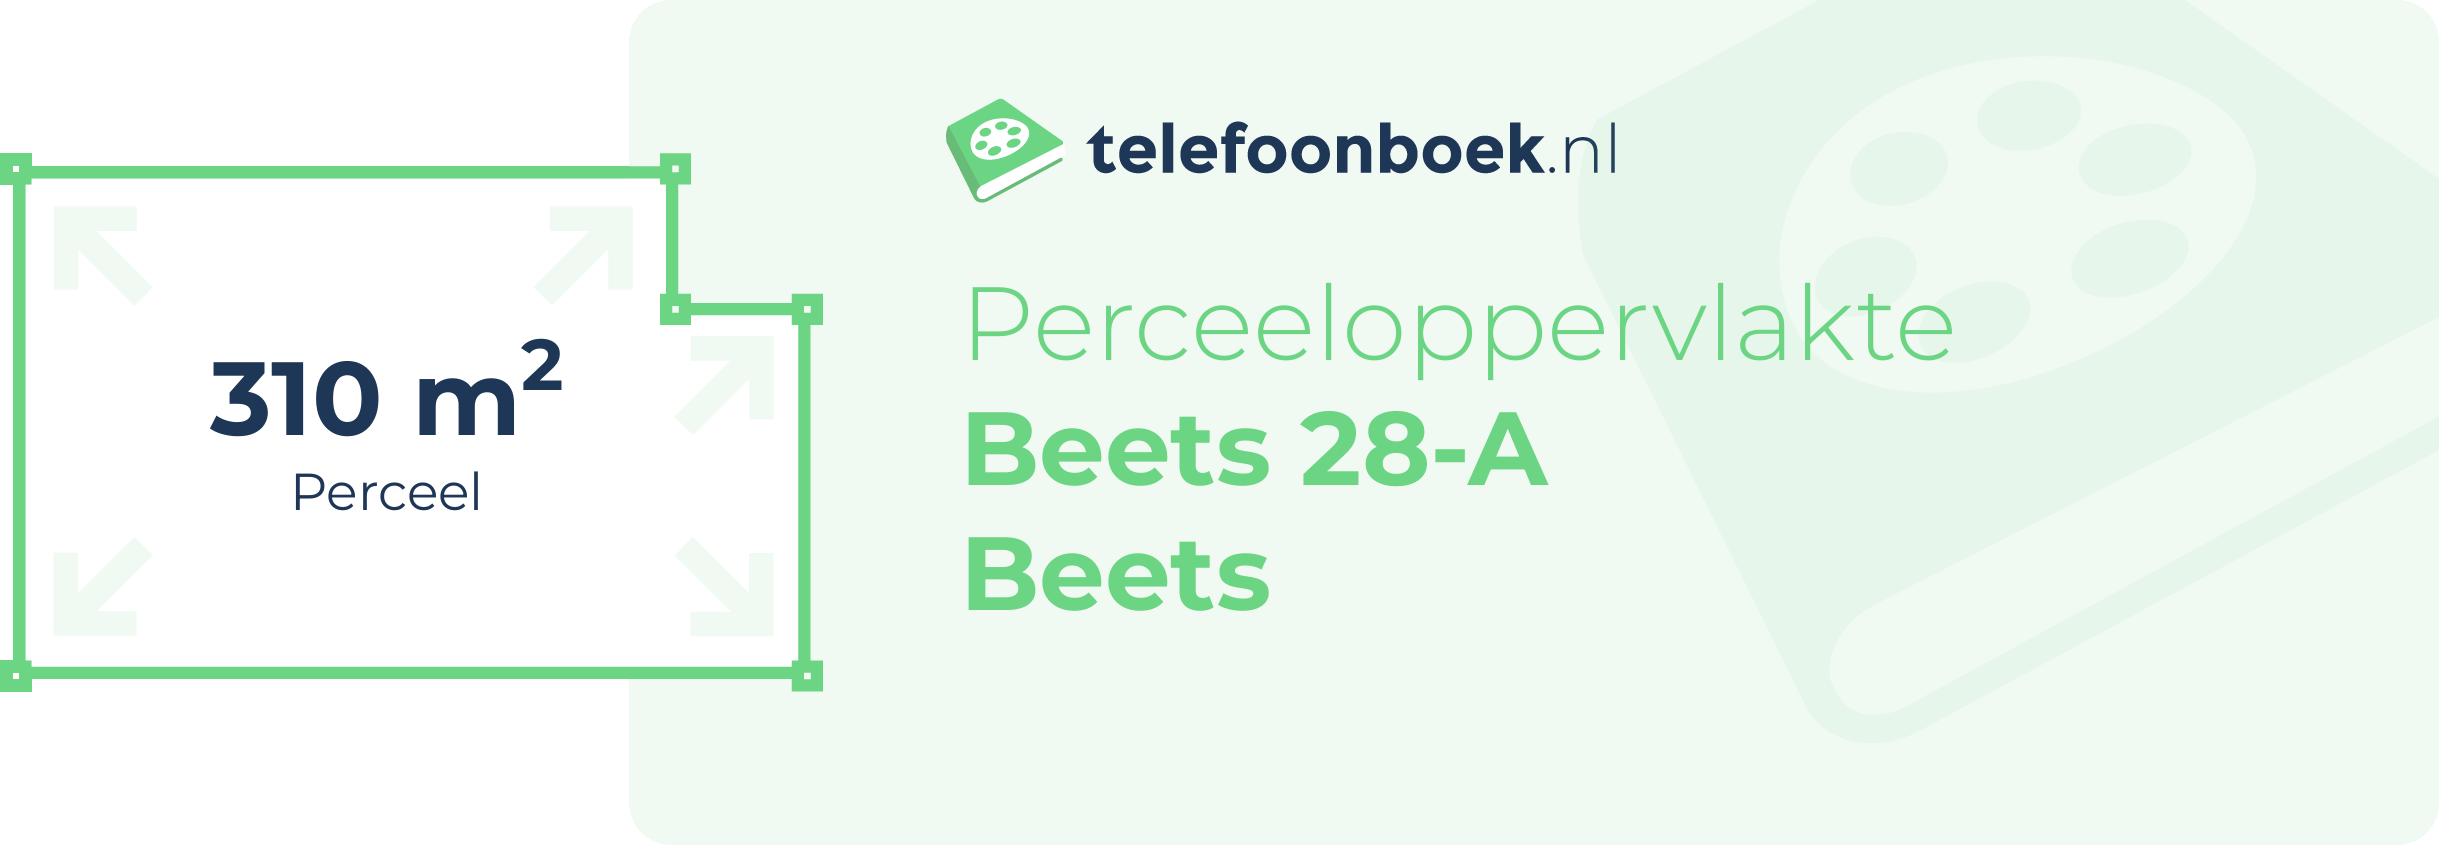 Perceeloppervlakte Beets 28-A Beets